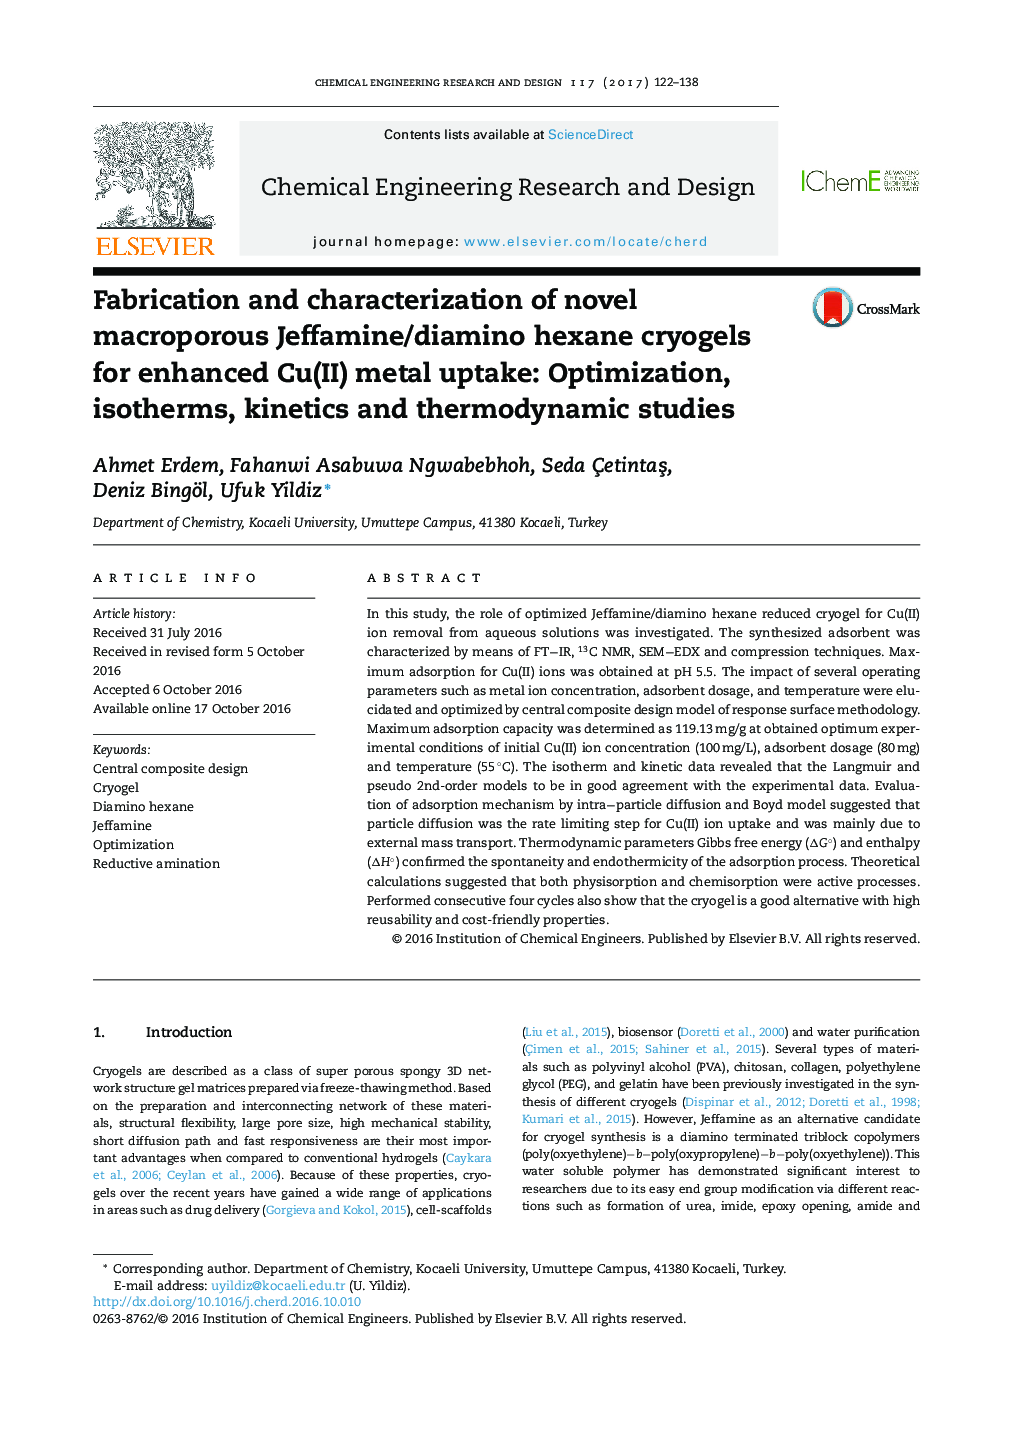 Fabrication and characterization of novel macroporous Jeffamine/diamino hexane cryogels for enhanced Cu(II) metal uptake: Optimization, isotherms, kinetics and thermodynamic studies